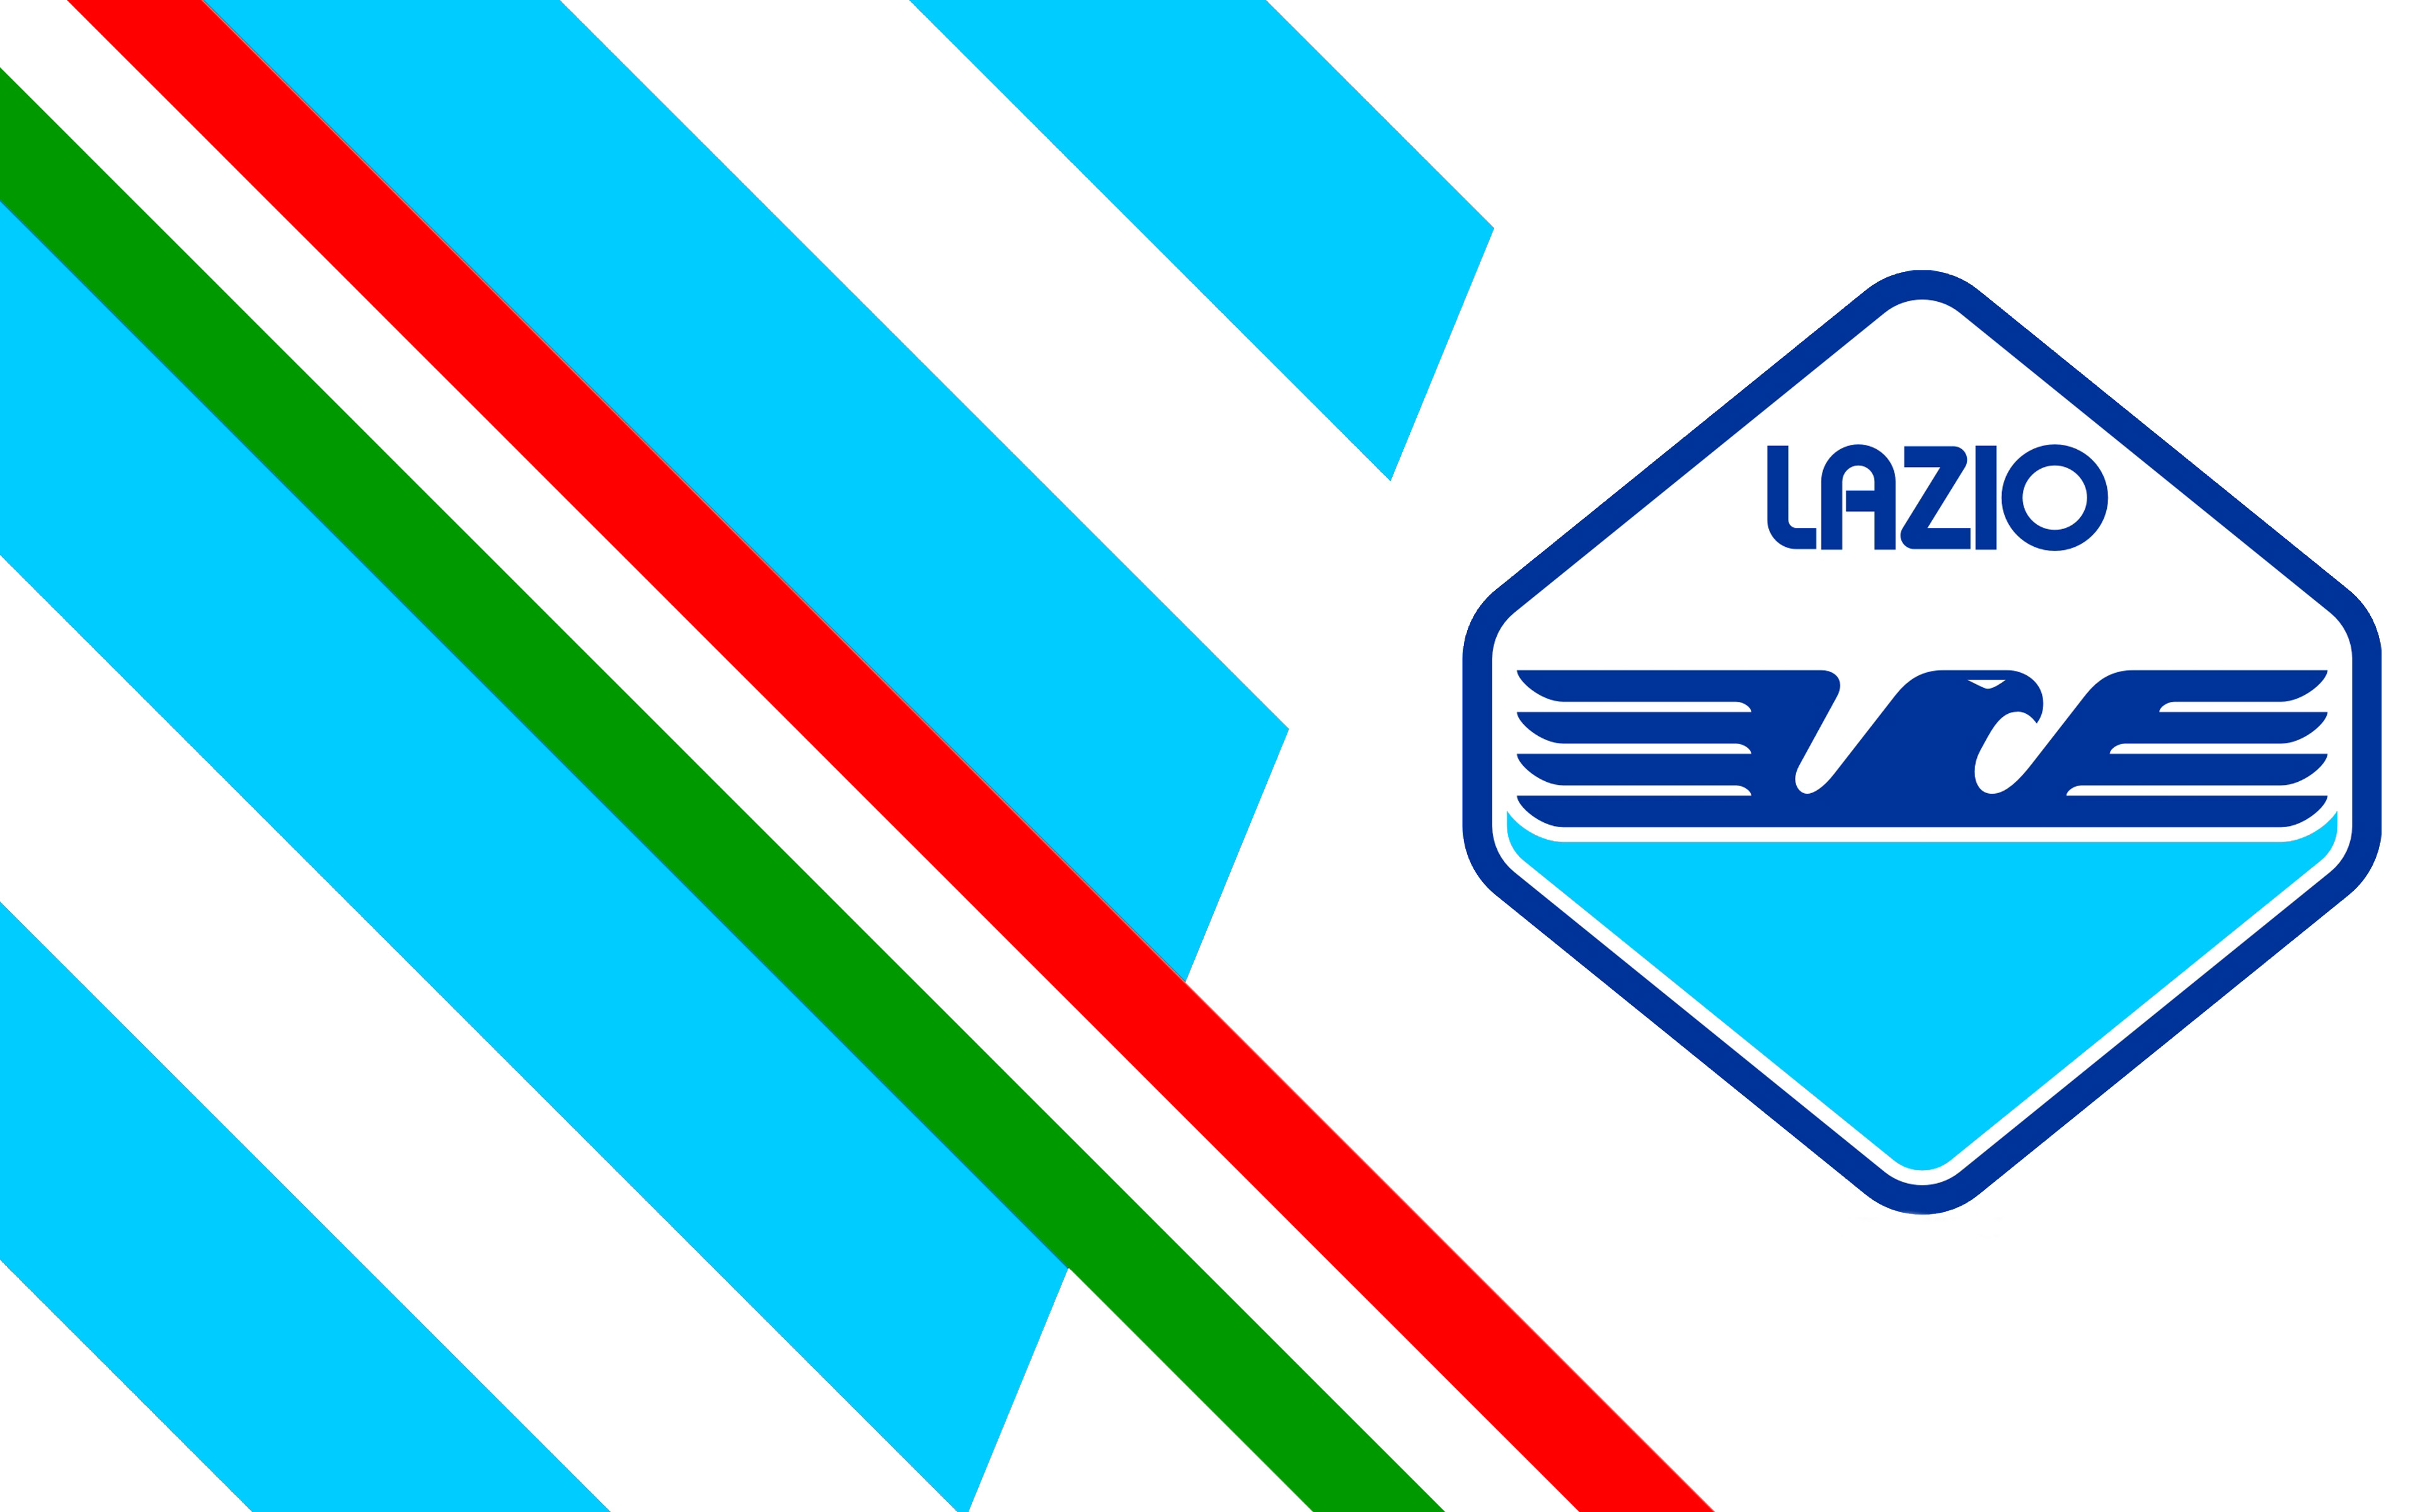 Descarga gratuita de fondo de pantalla para móvil de Fútbol, Logo, Deporte, Ss Lazio.